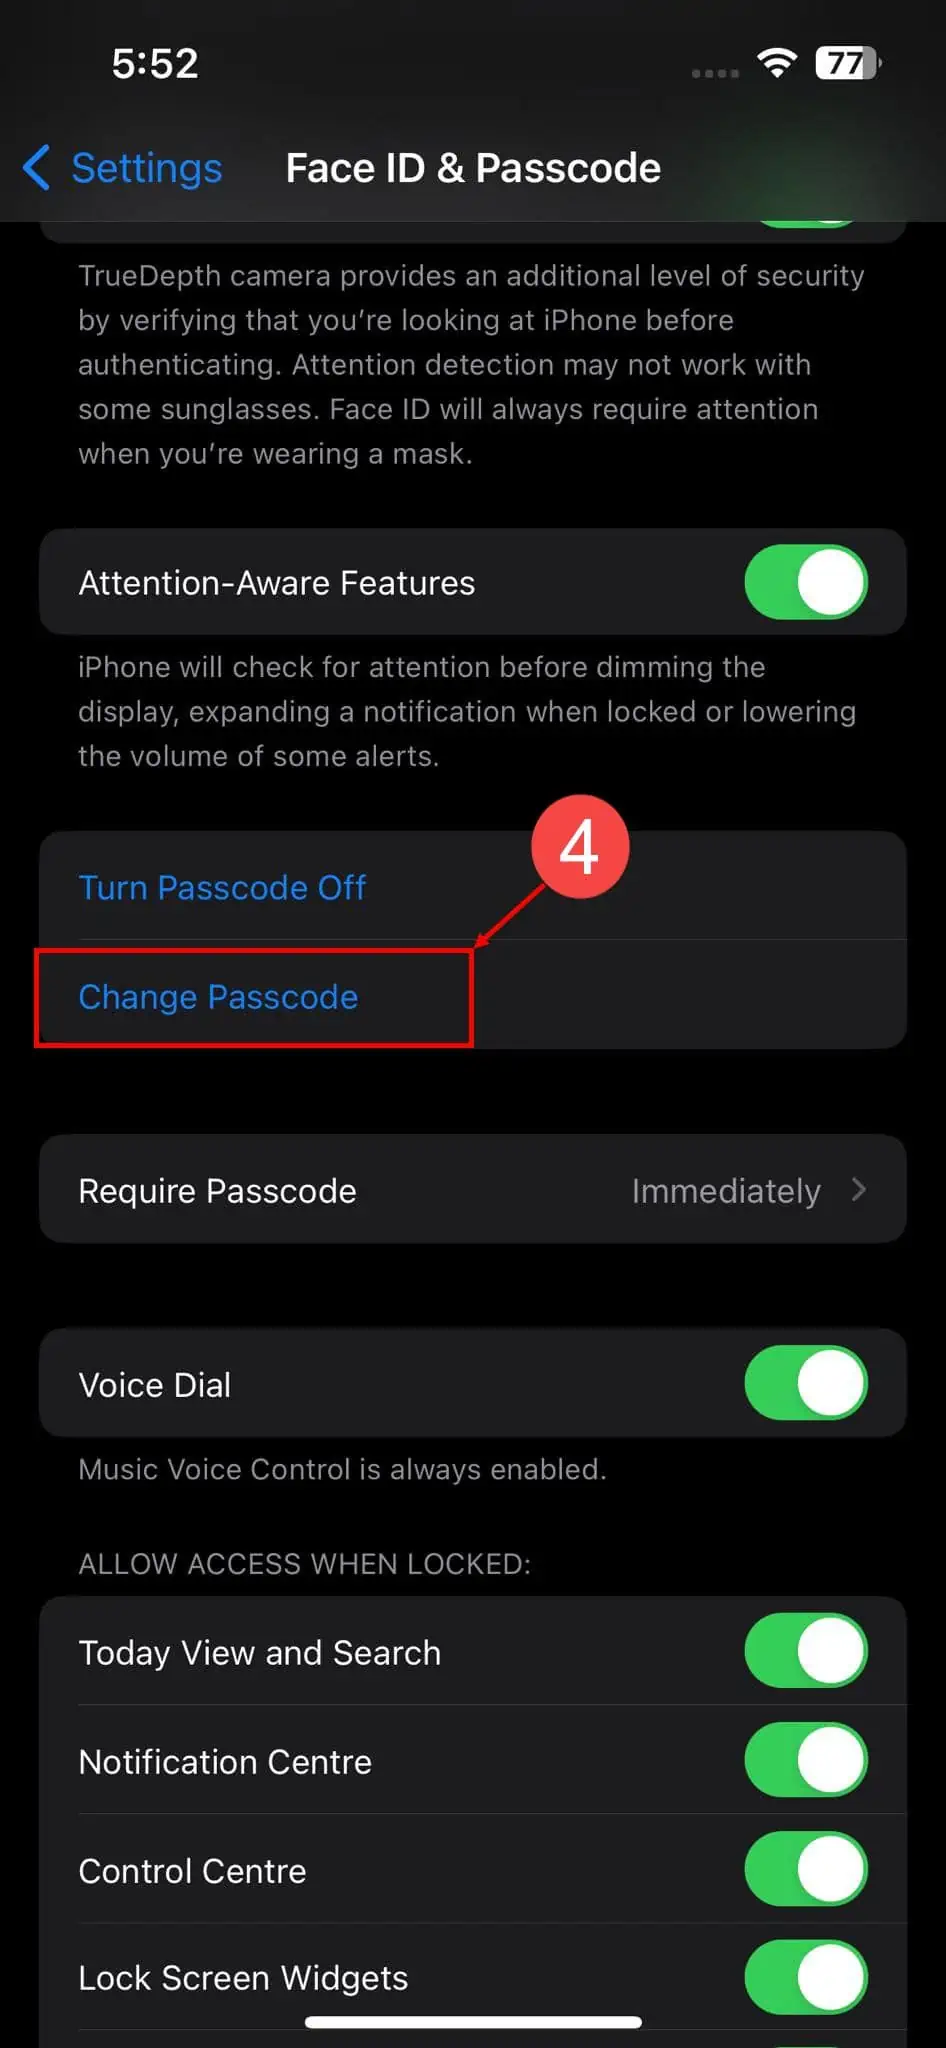 face id & passcode settings change passcode